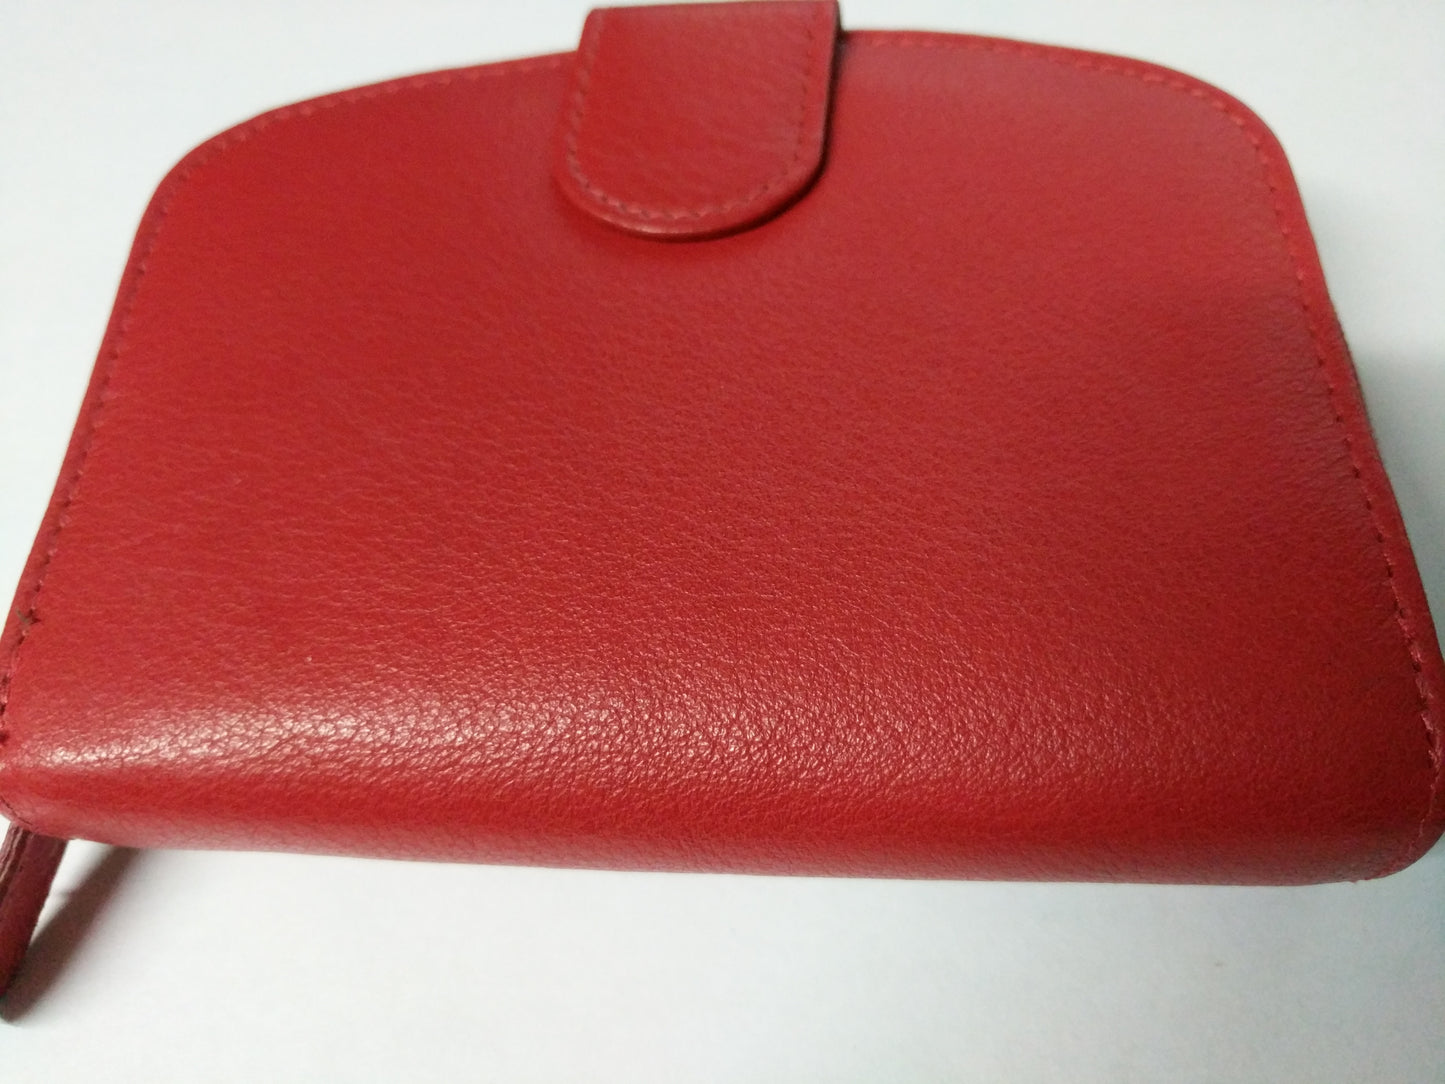 Charles Smith Zip Round Leather Purse- 12x9cm